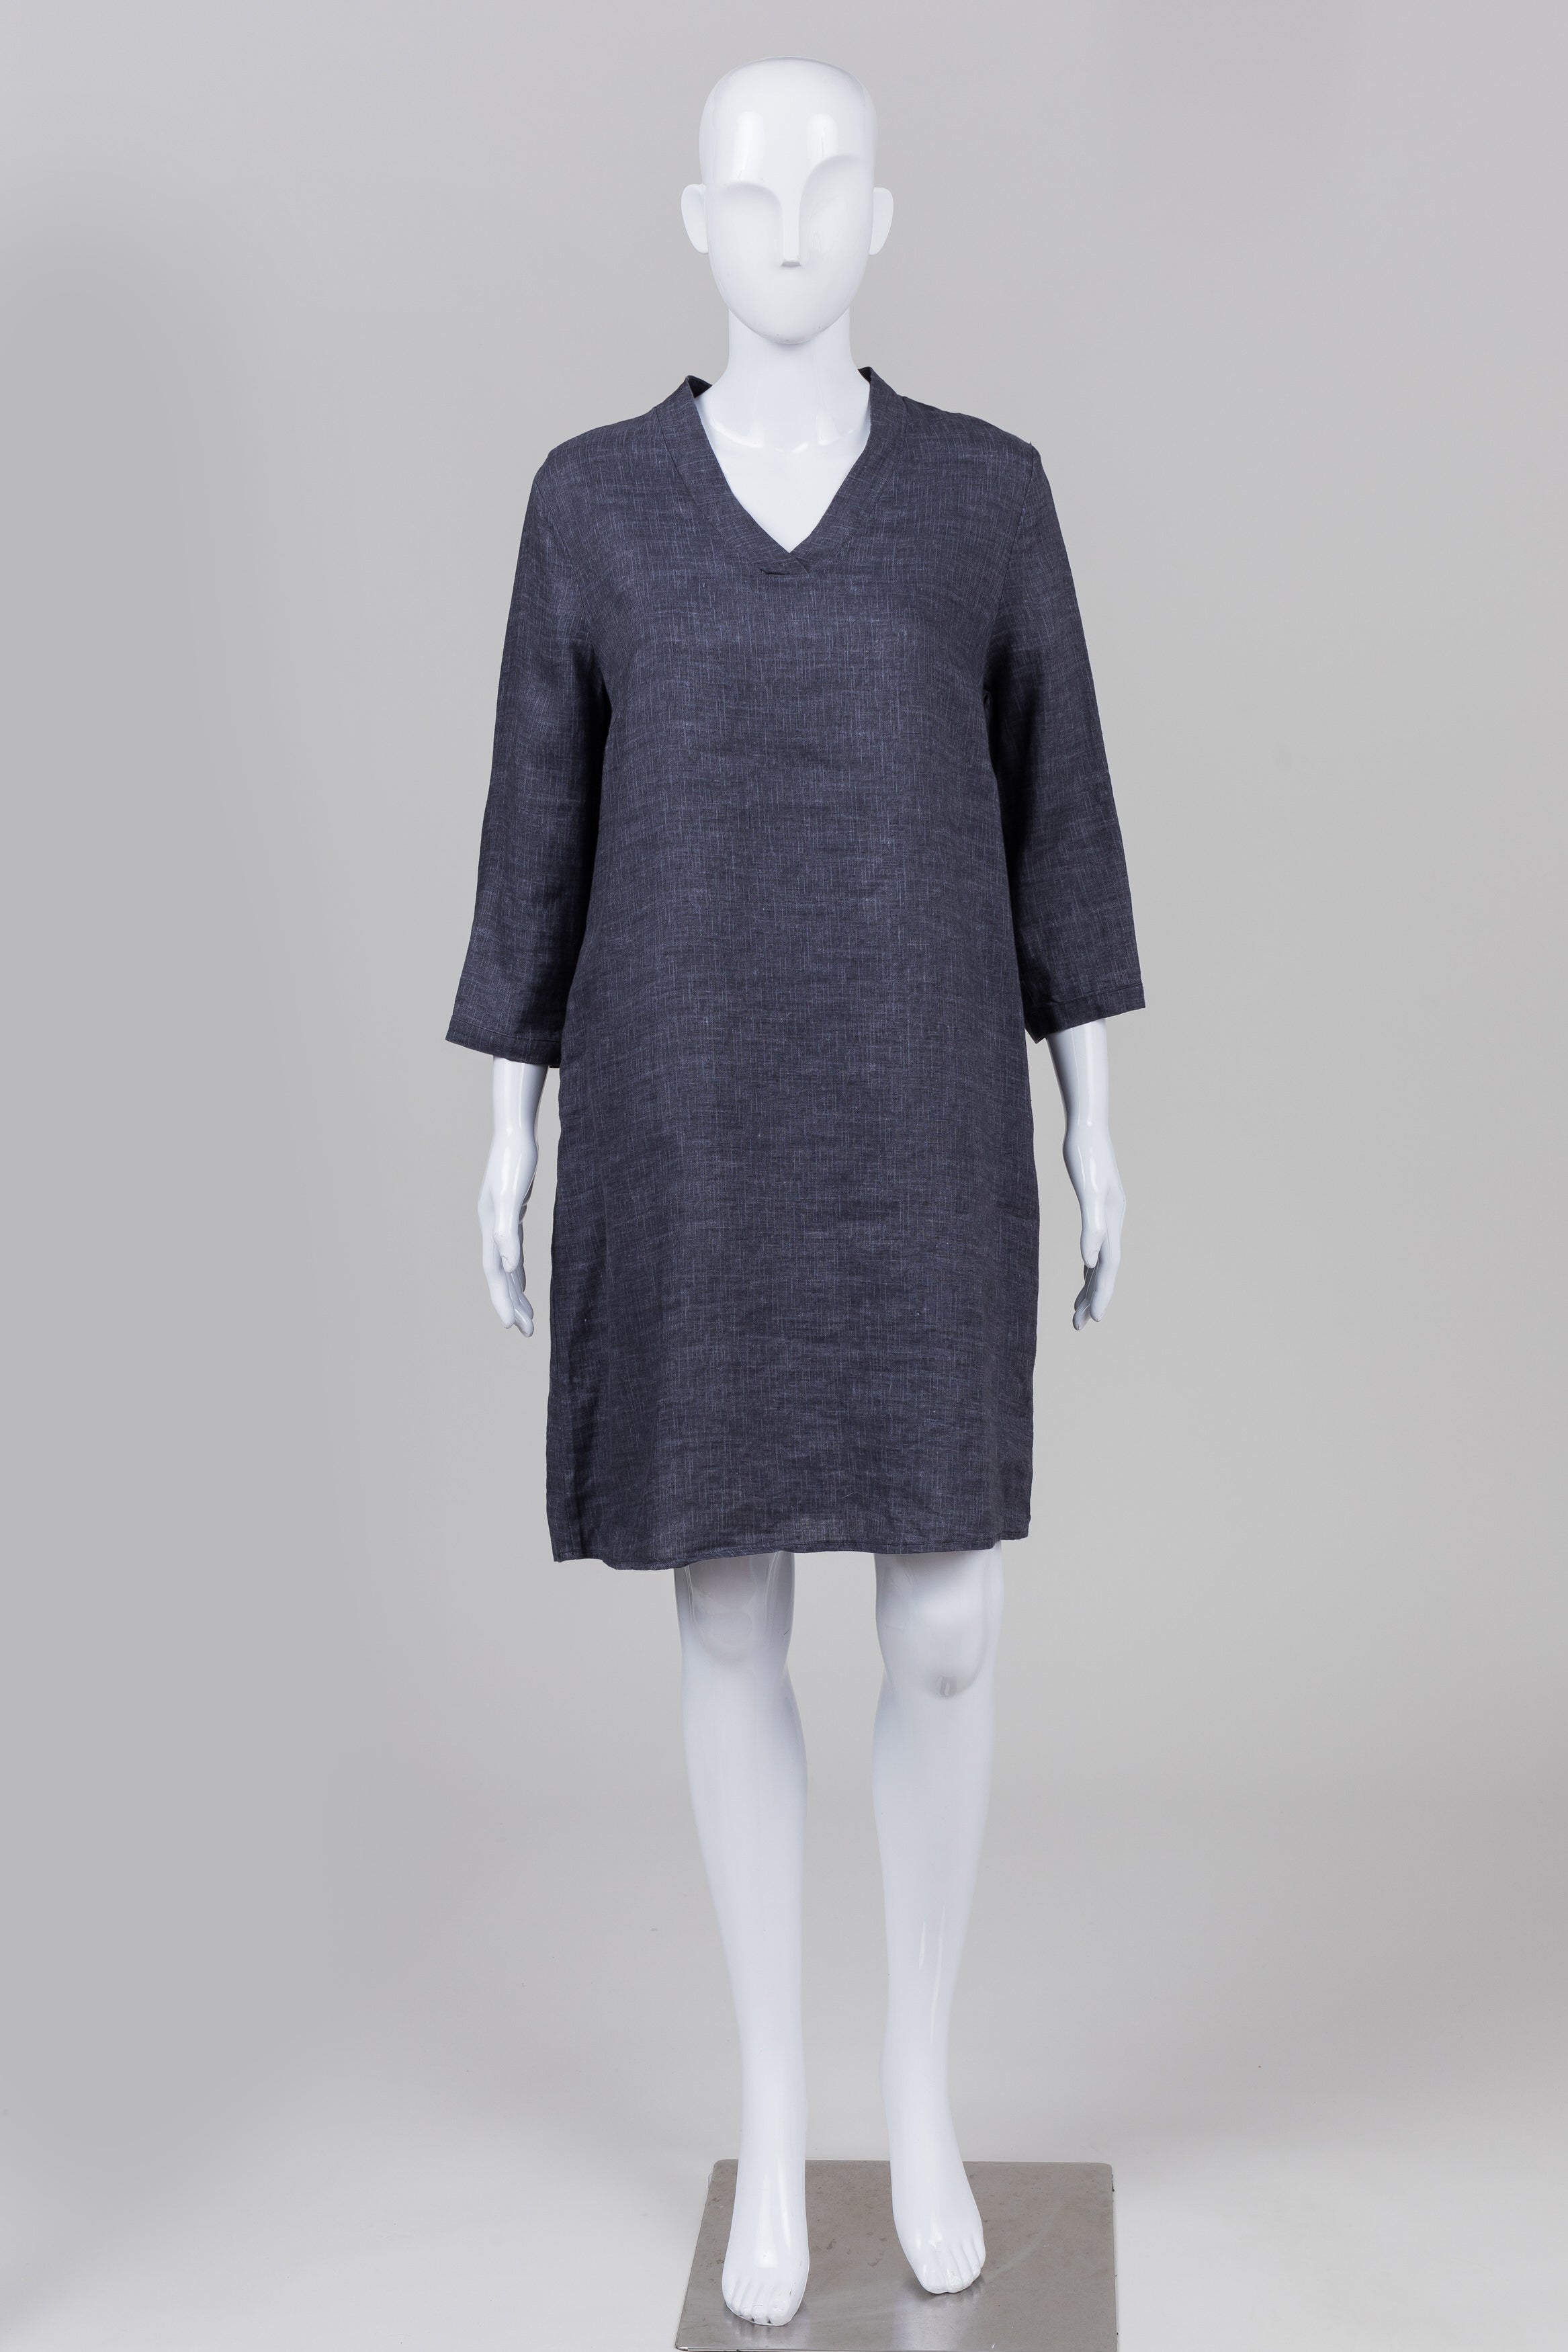 Vicci Grey Slub 3/4 Sleeve Linen Shift Dress (38)